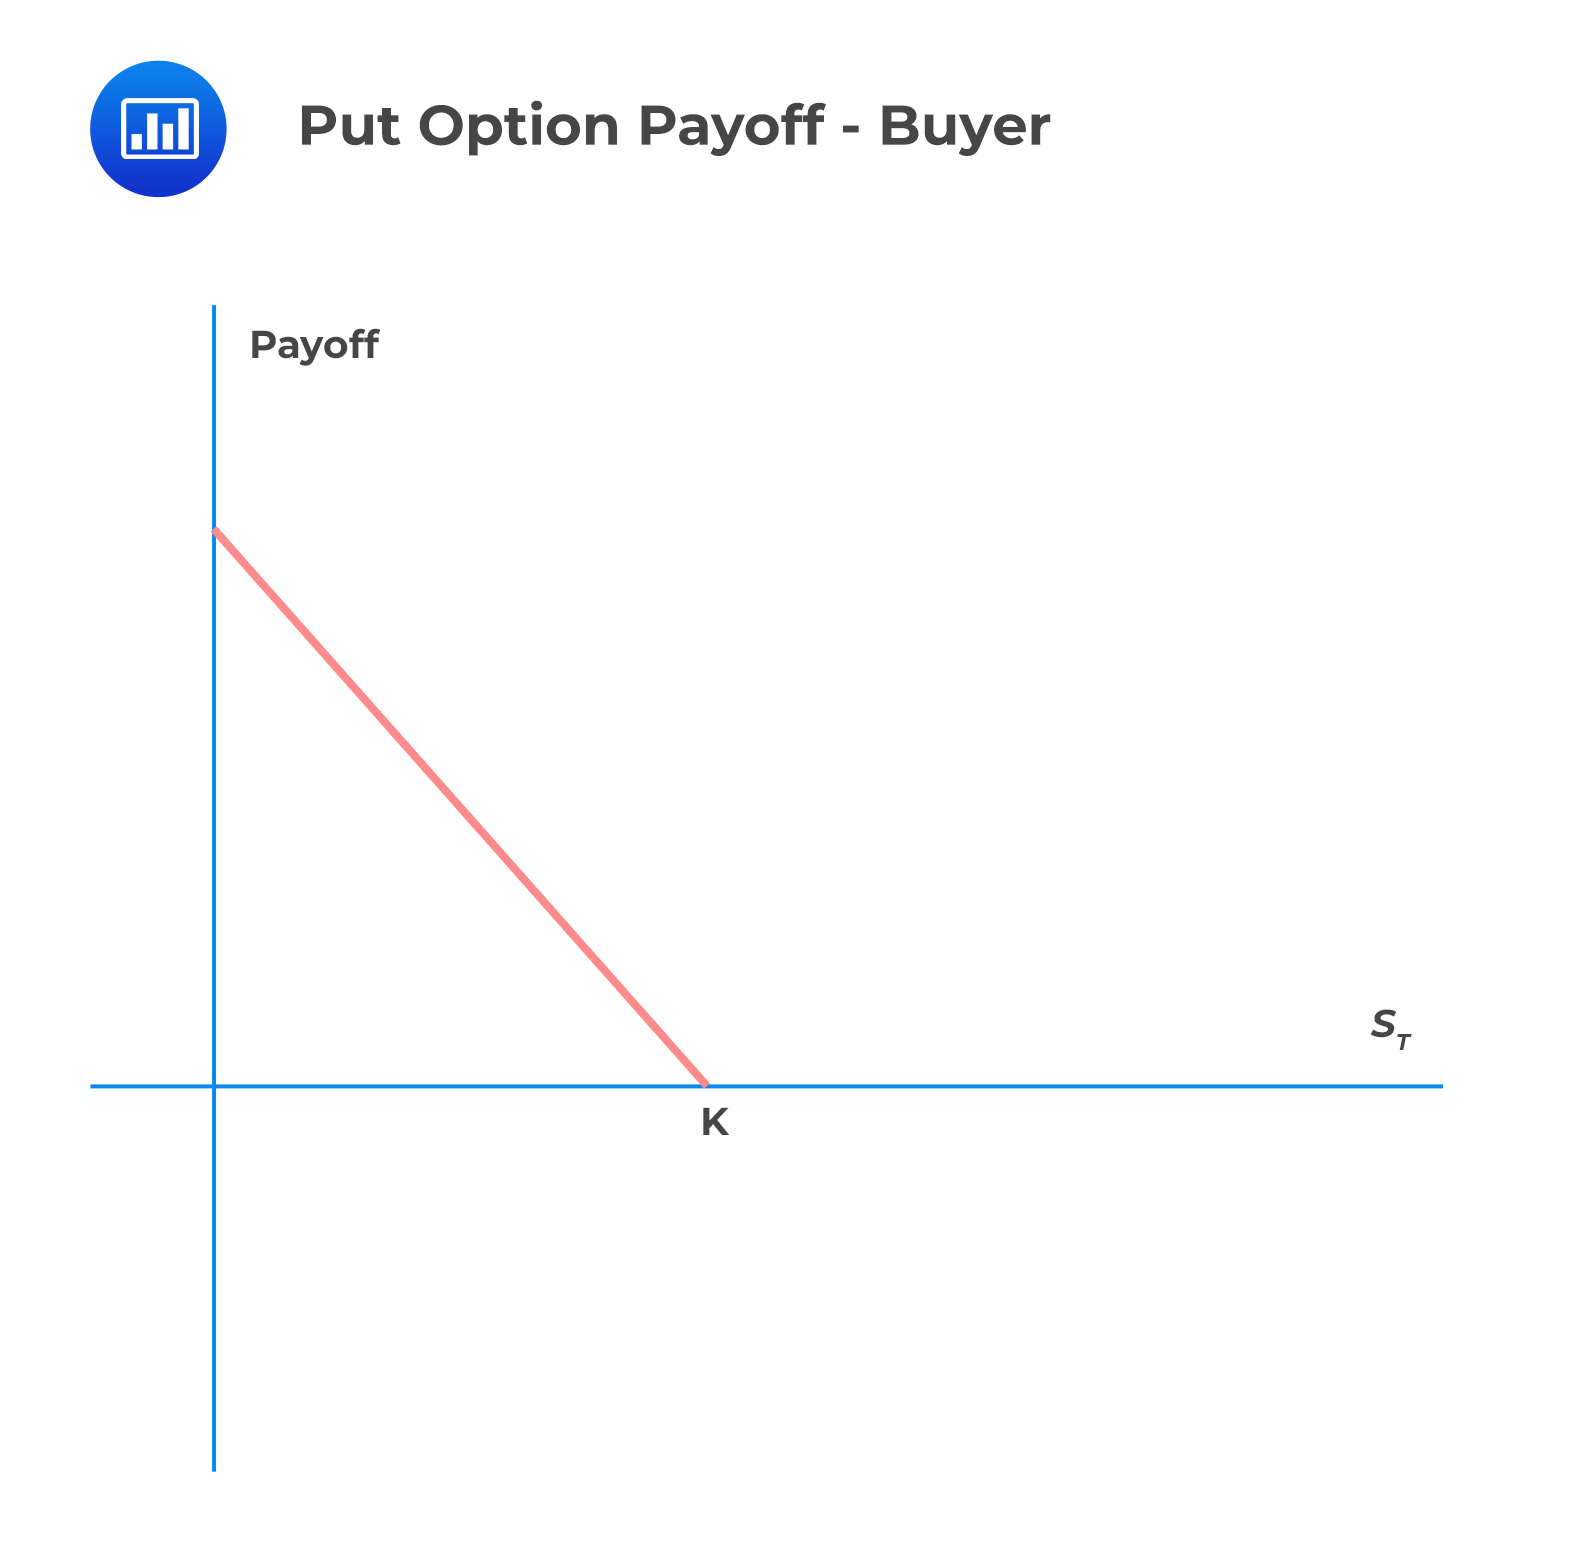 Put Option Payoff - Buyer